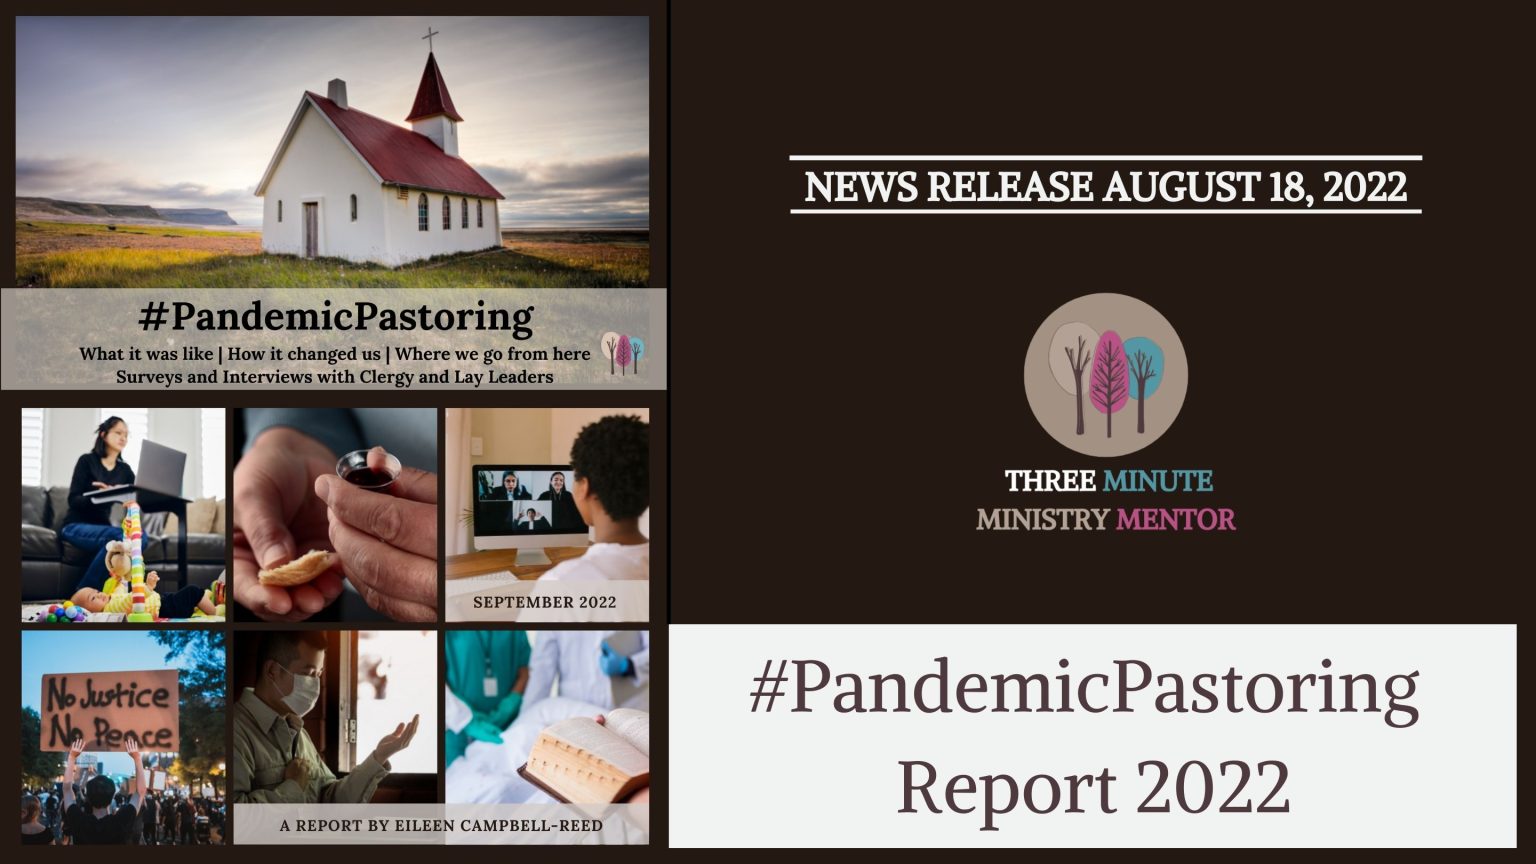 #PandemicPastoring Report 2022 @ Zoom